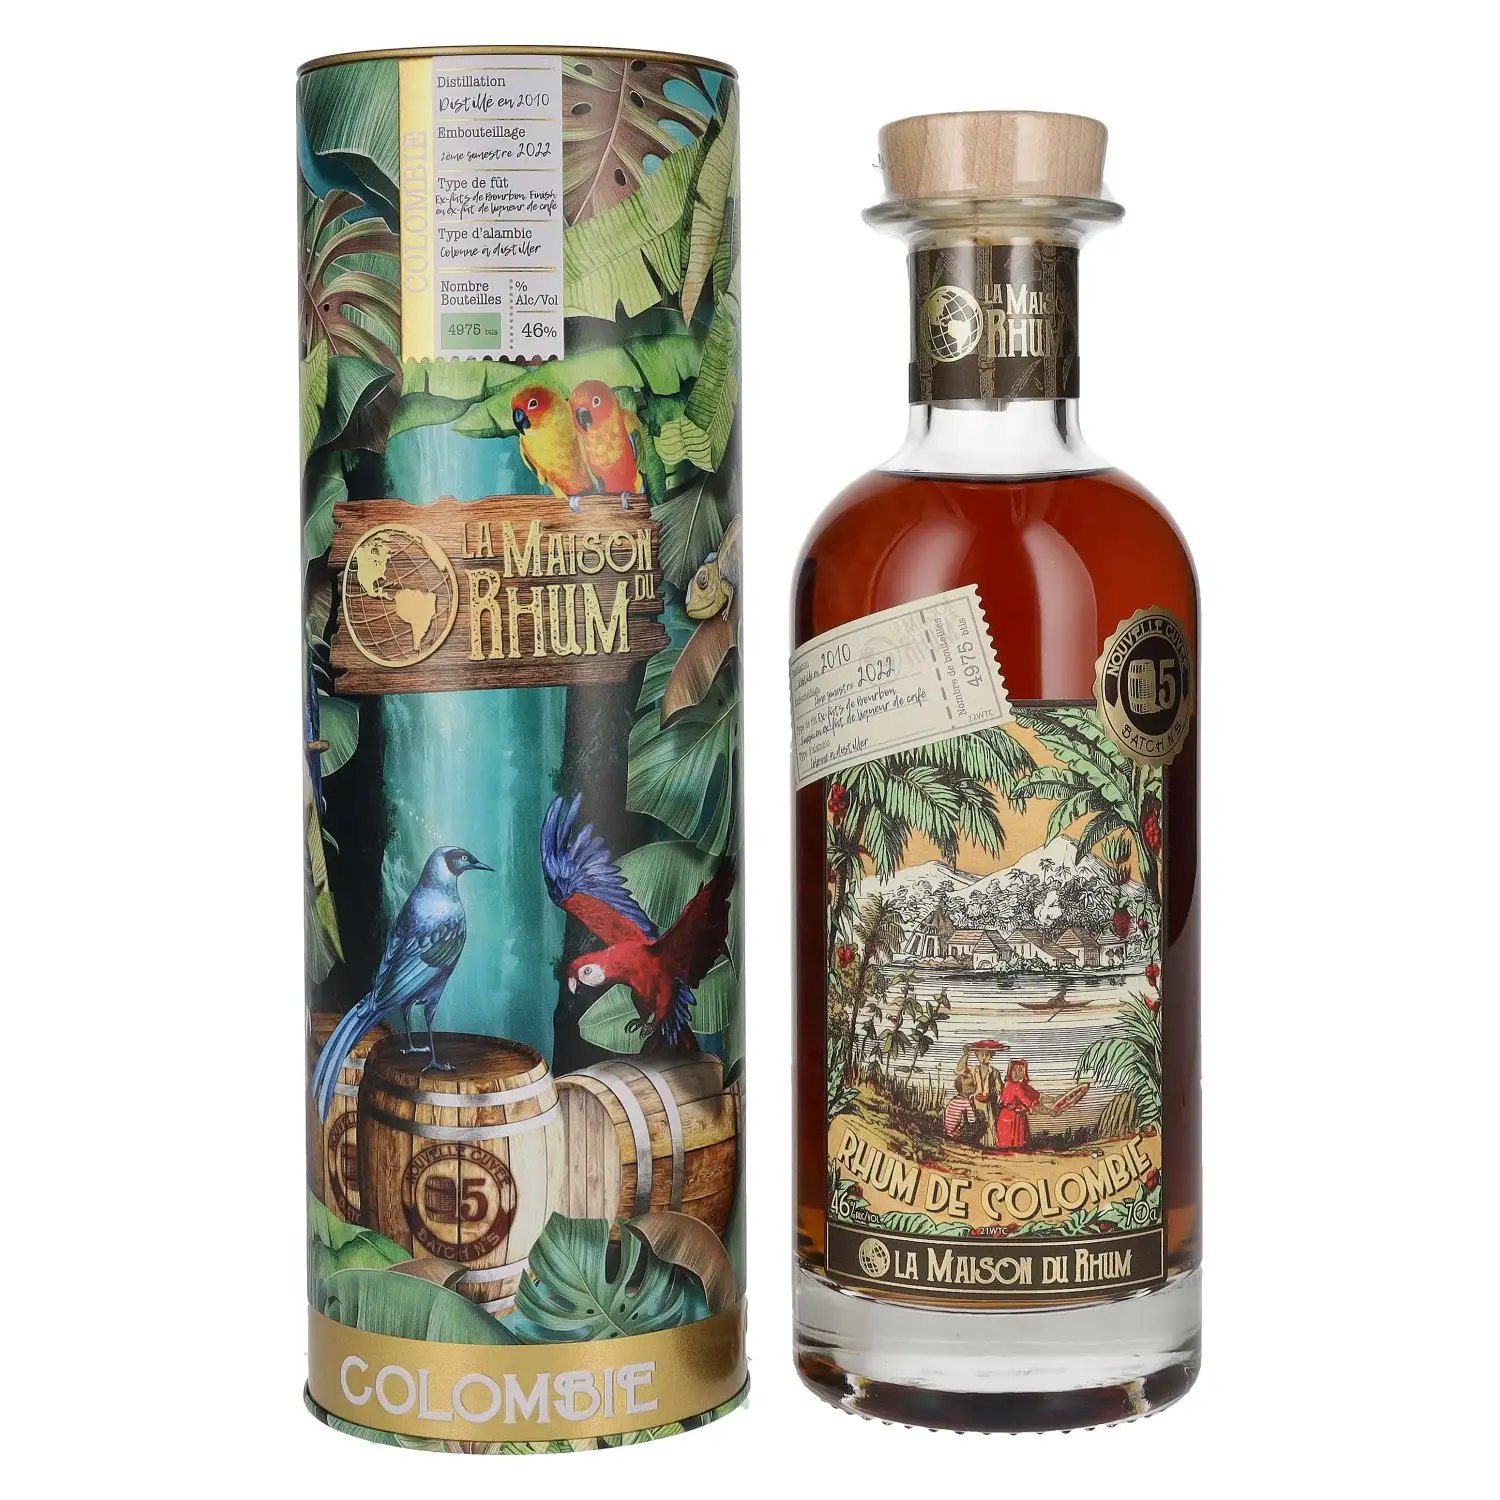 Image of the front of the bottle of the rum La Maison du Rhum #5